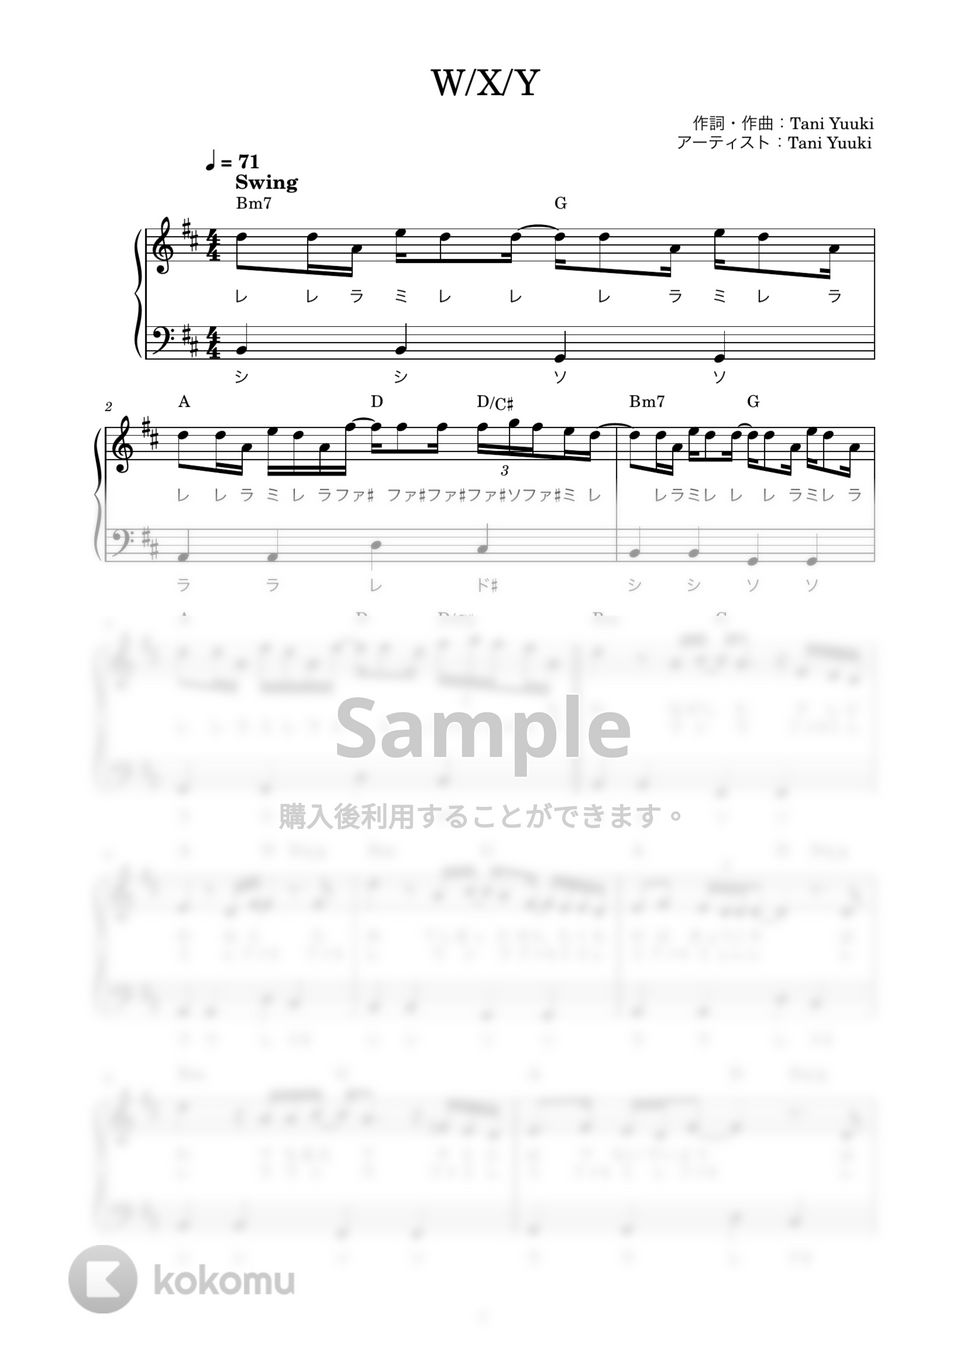 Tani Yuuki - W/X/Y (かんたん / 歌詞付き / ドレミ付き / 初心者) by piano.tokyo